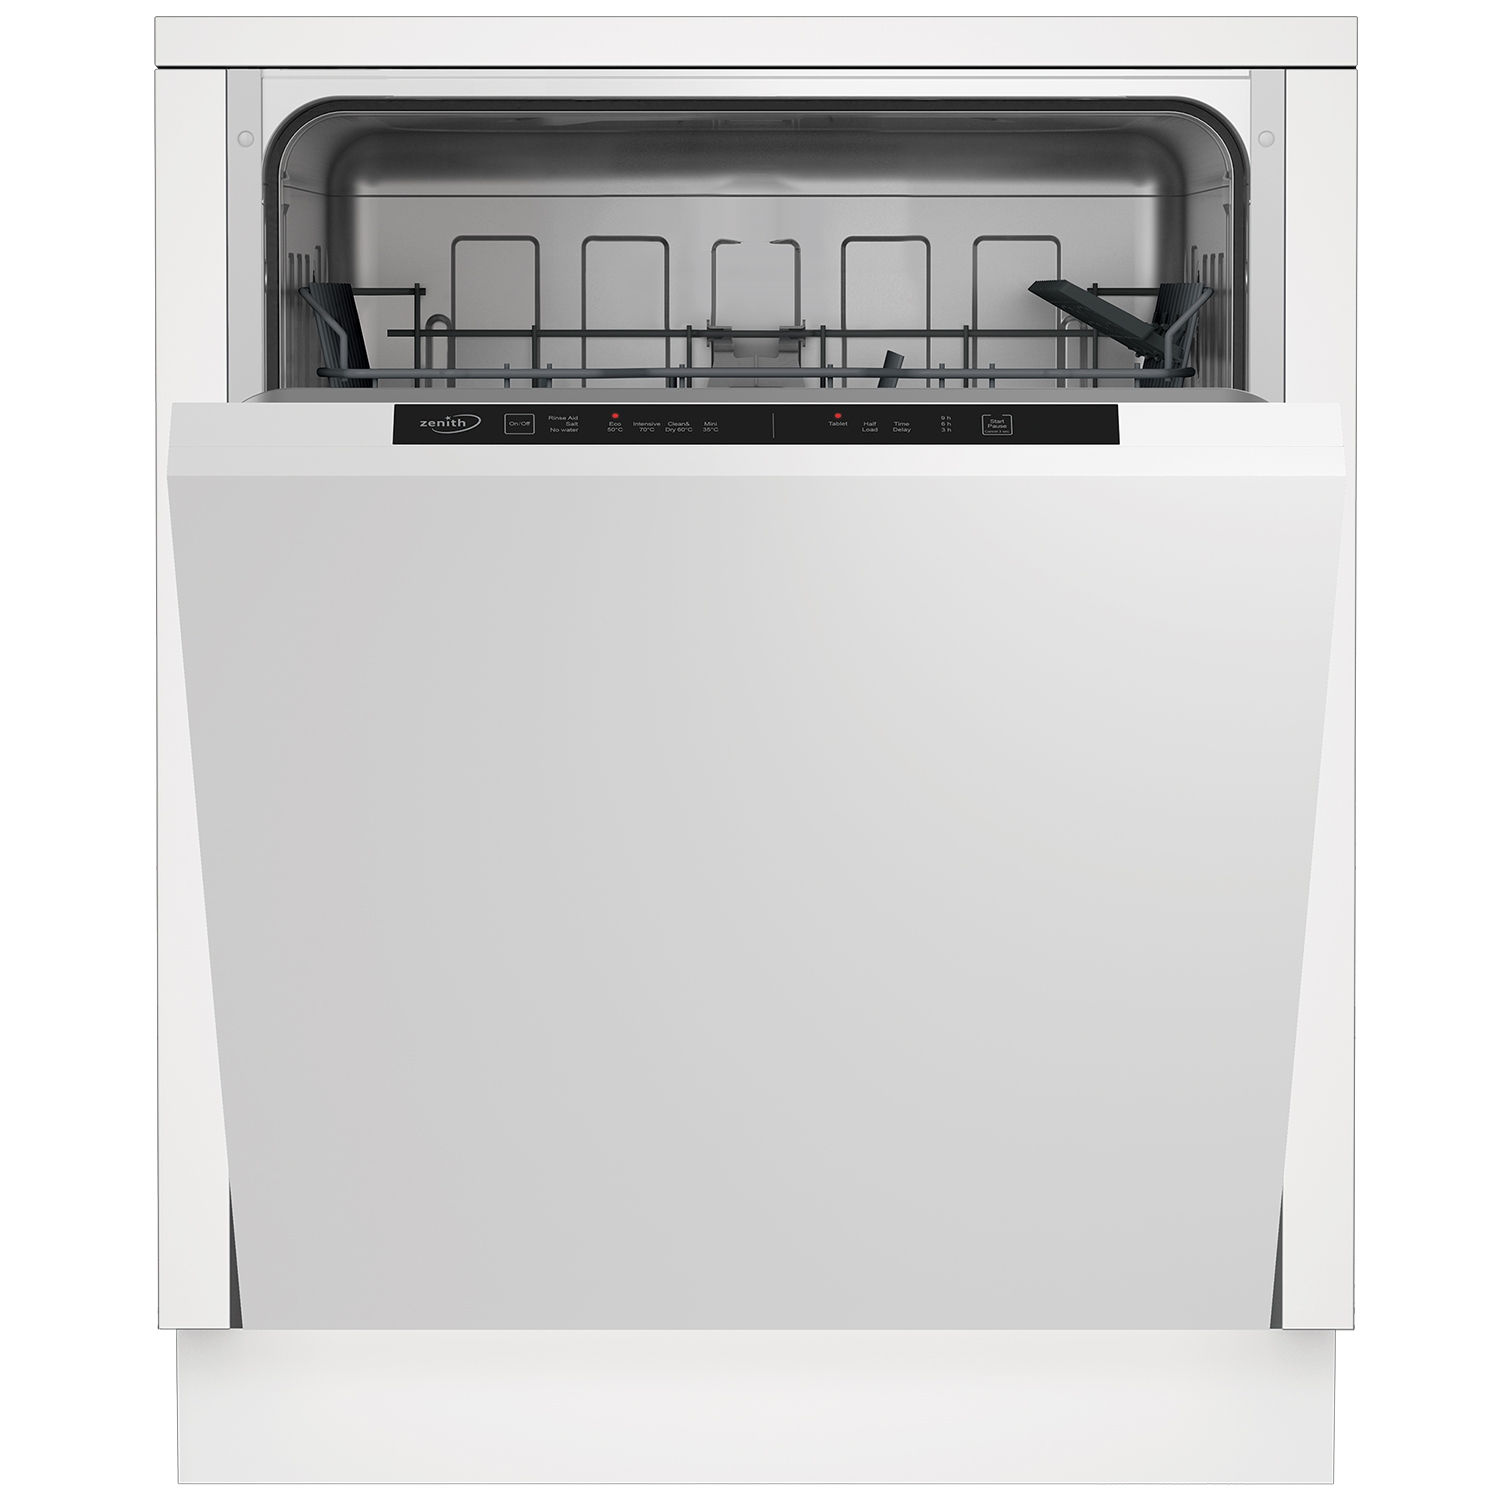 Zenith ZDWI600 Integrated Full Size Dishwasher - 13 Place Settings - 0